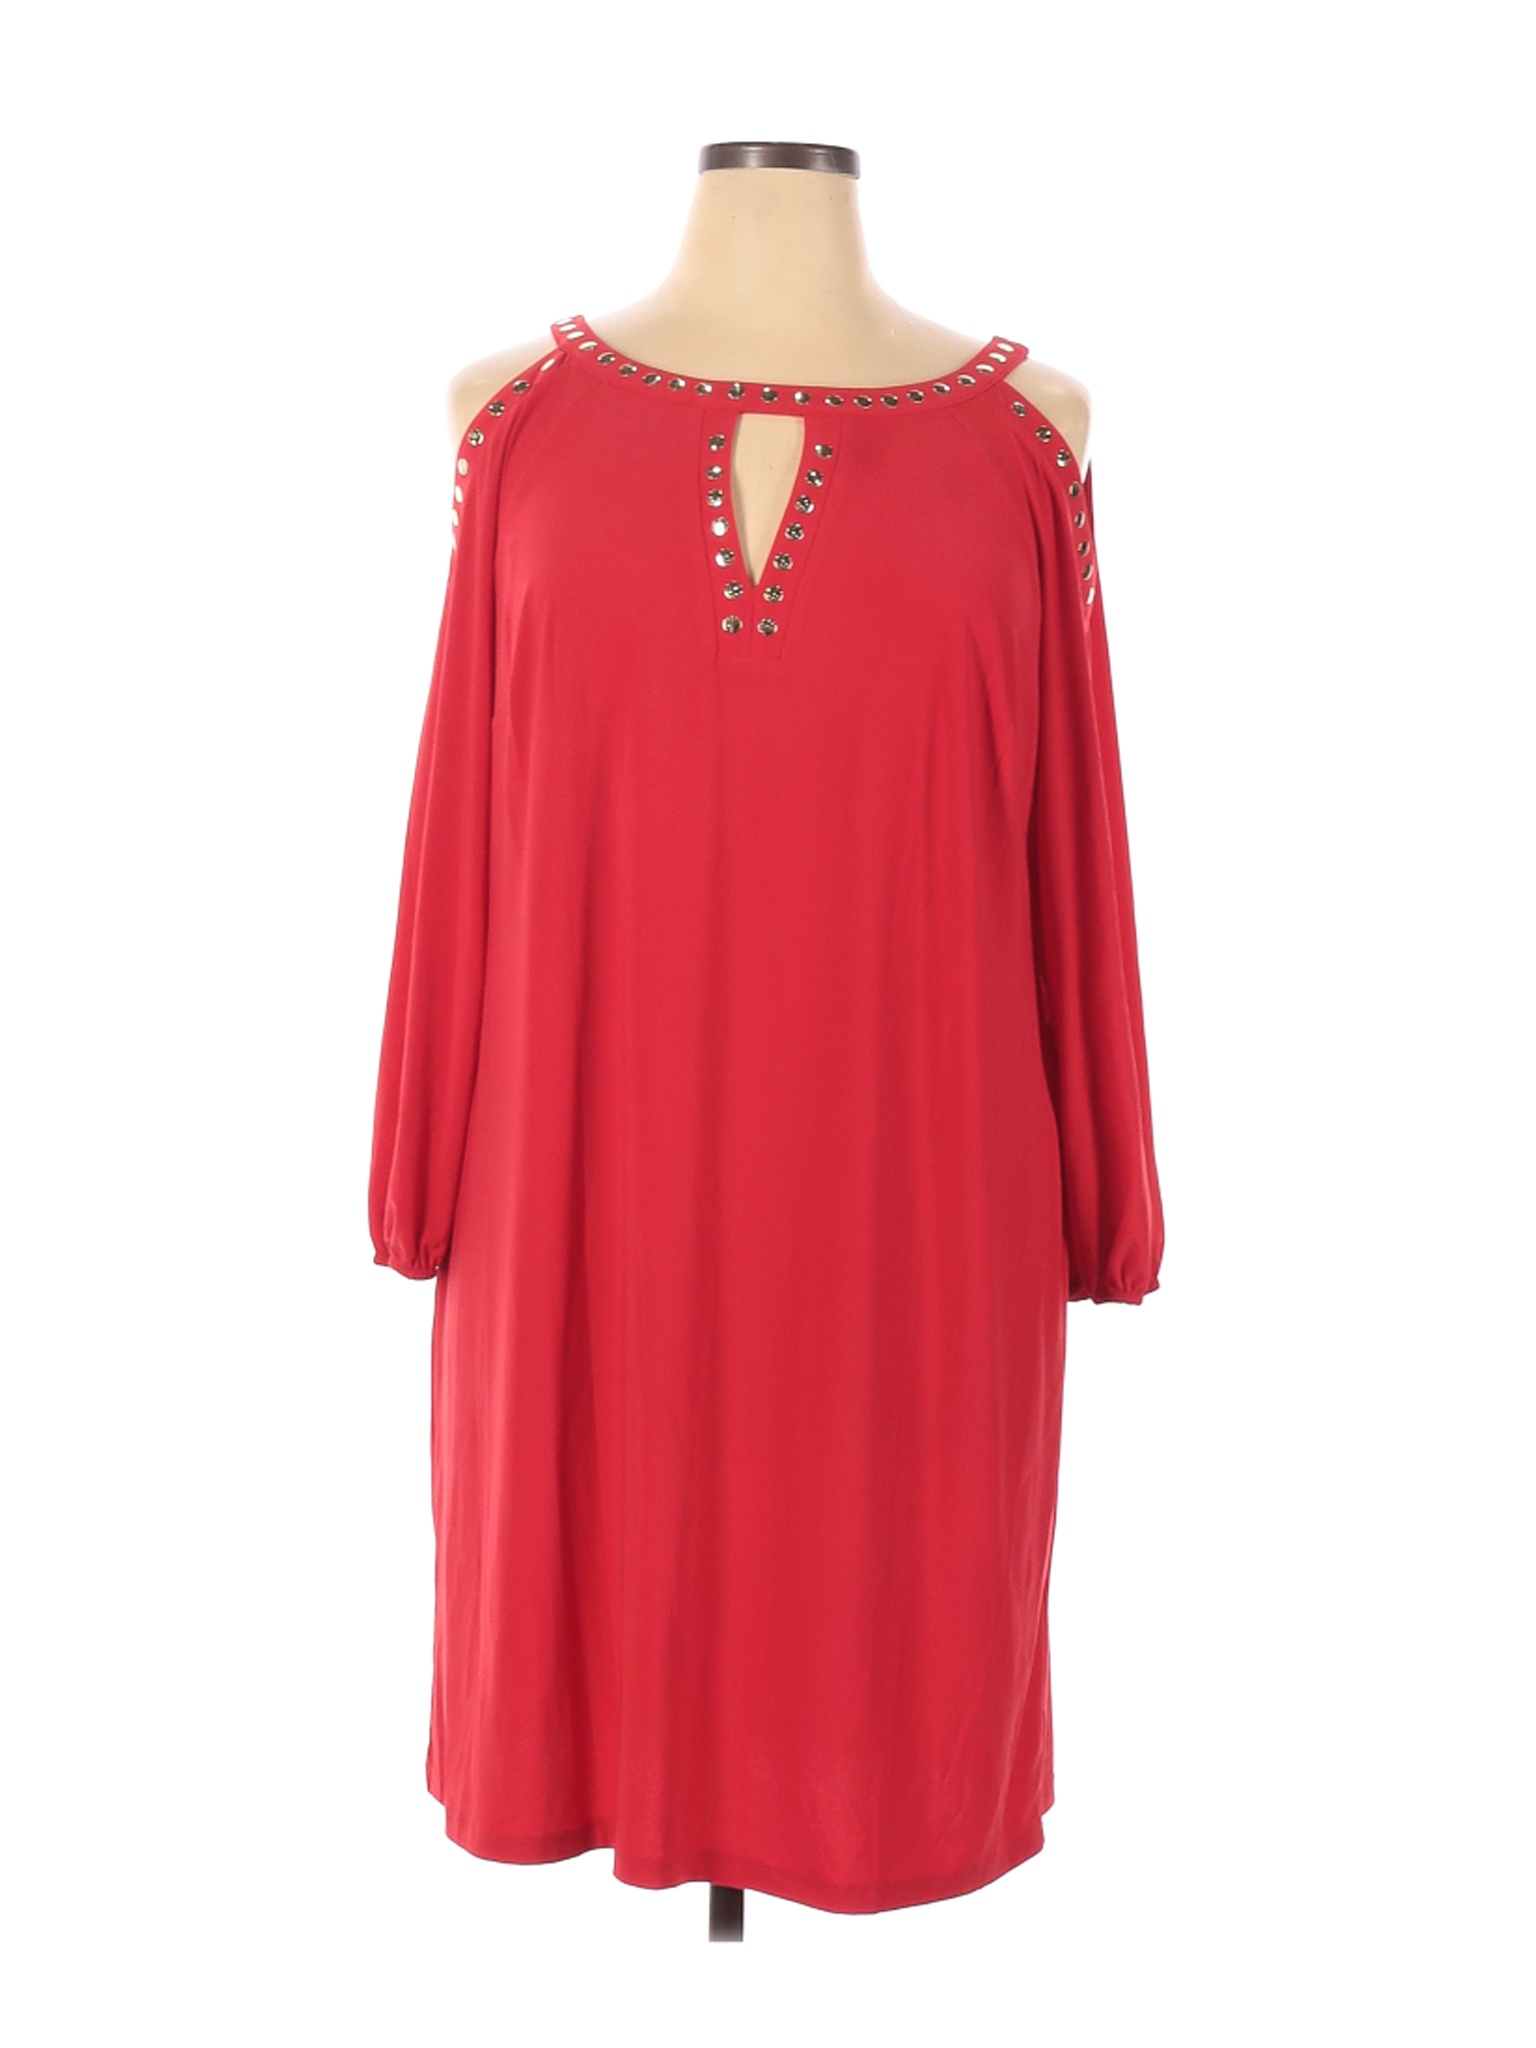 Emma & Michele Women Red Casual Dress 1X Plus | eBay